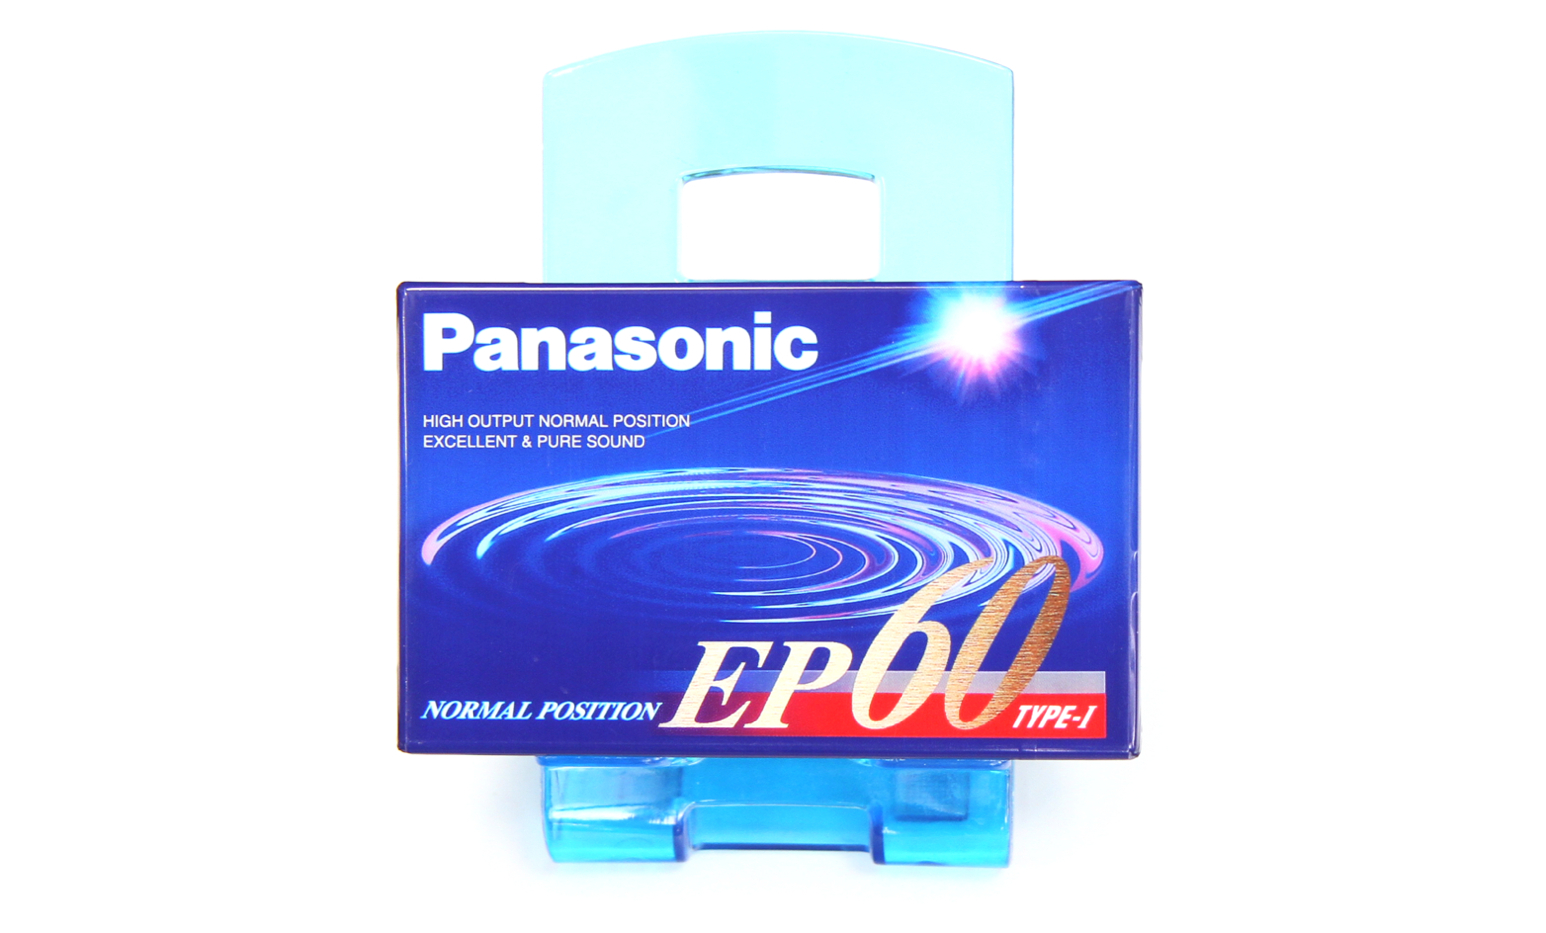 PANASONIC EP-60 Japan